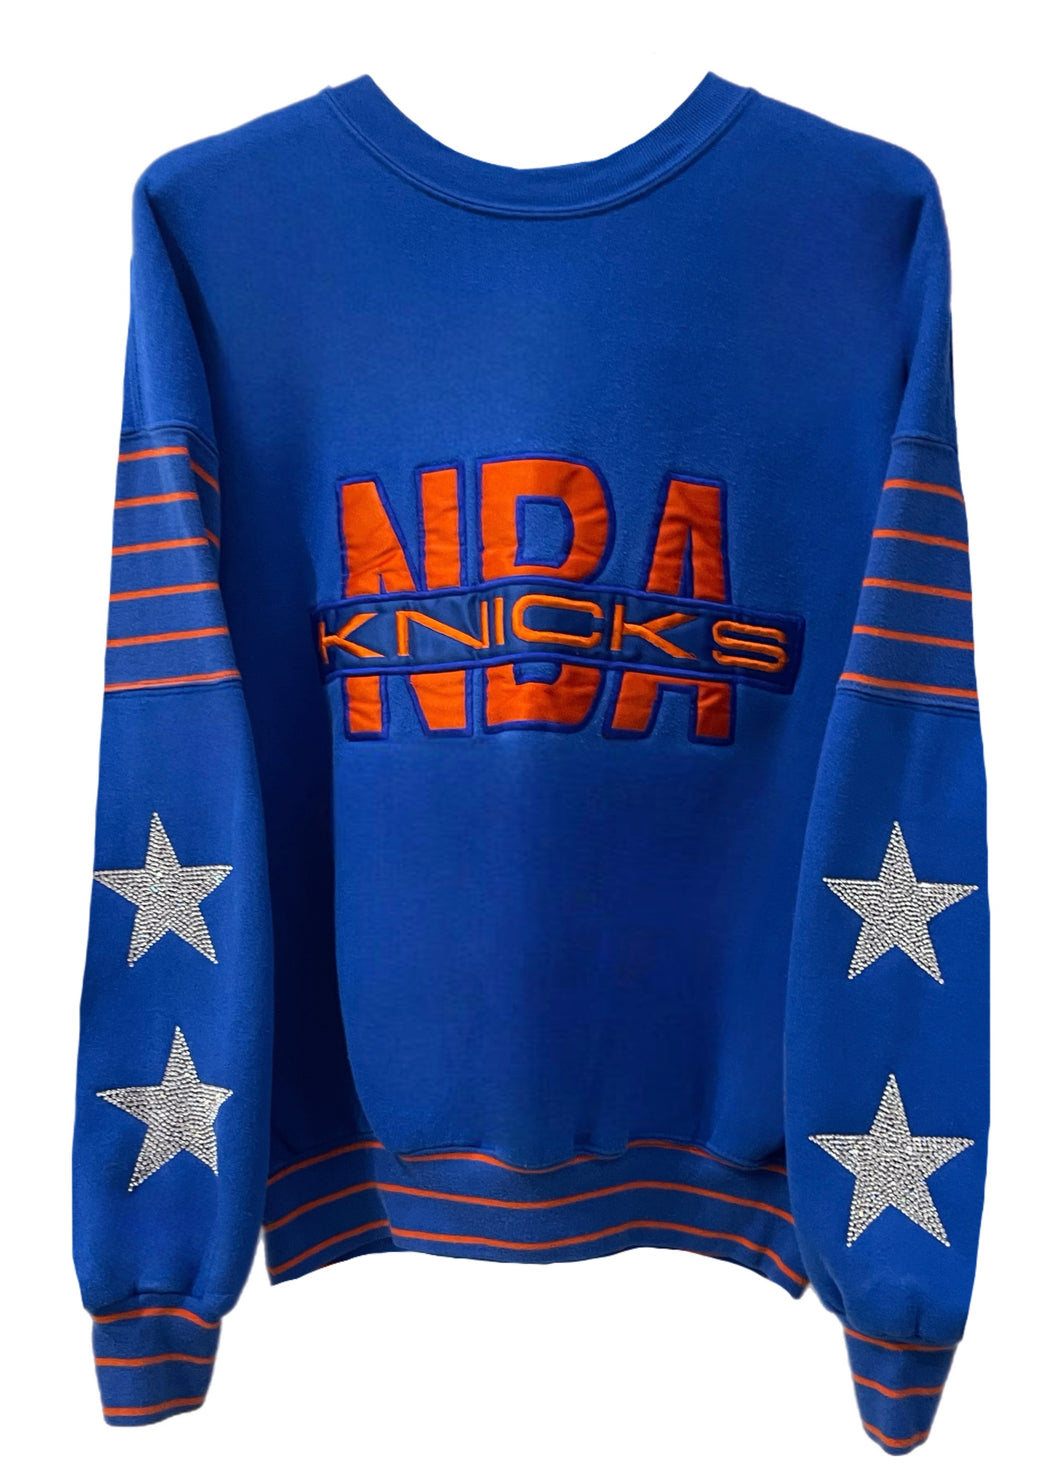 New York NY Knicks, NBA One of a KIND Vintage Sweatshirt with Crystal Star Design